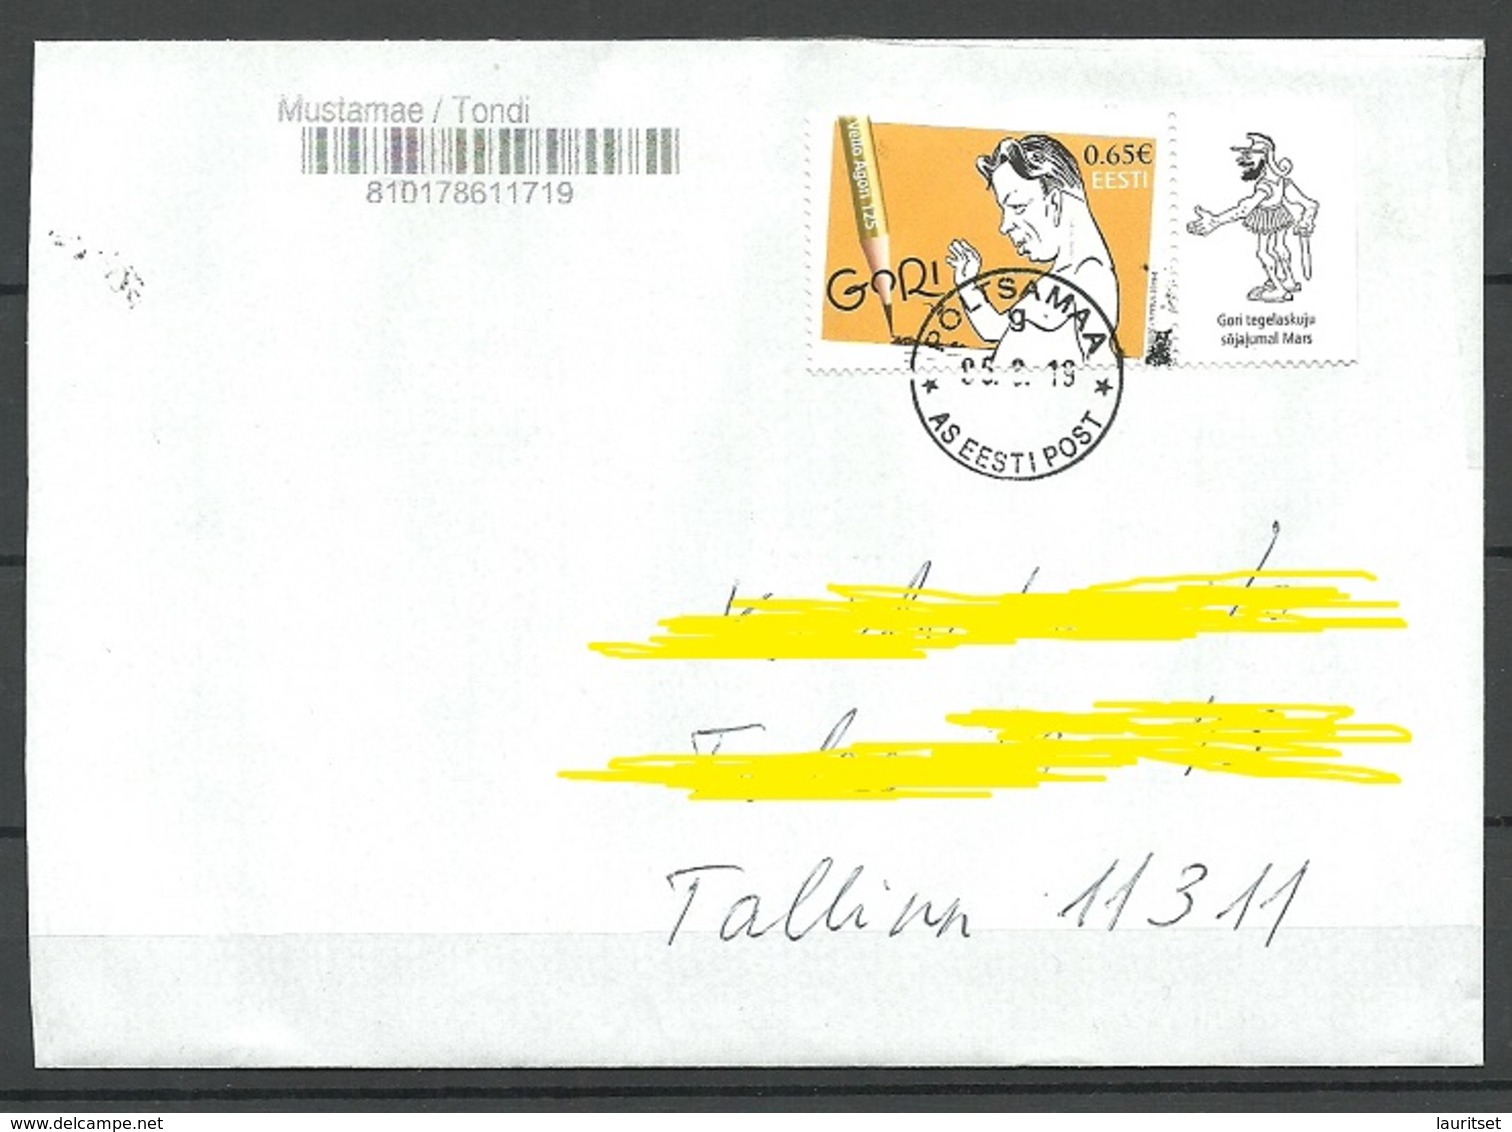 ESTLAND Estonia 2019 Domestic Cover GORI Caricature Artist Art Kunst Corner Stamp As Single - Estland